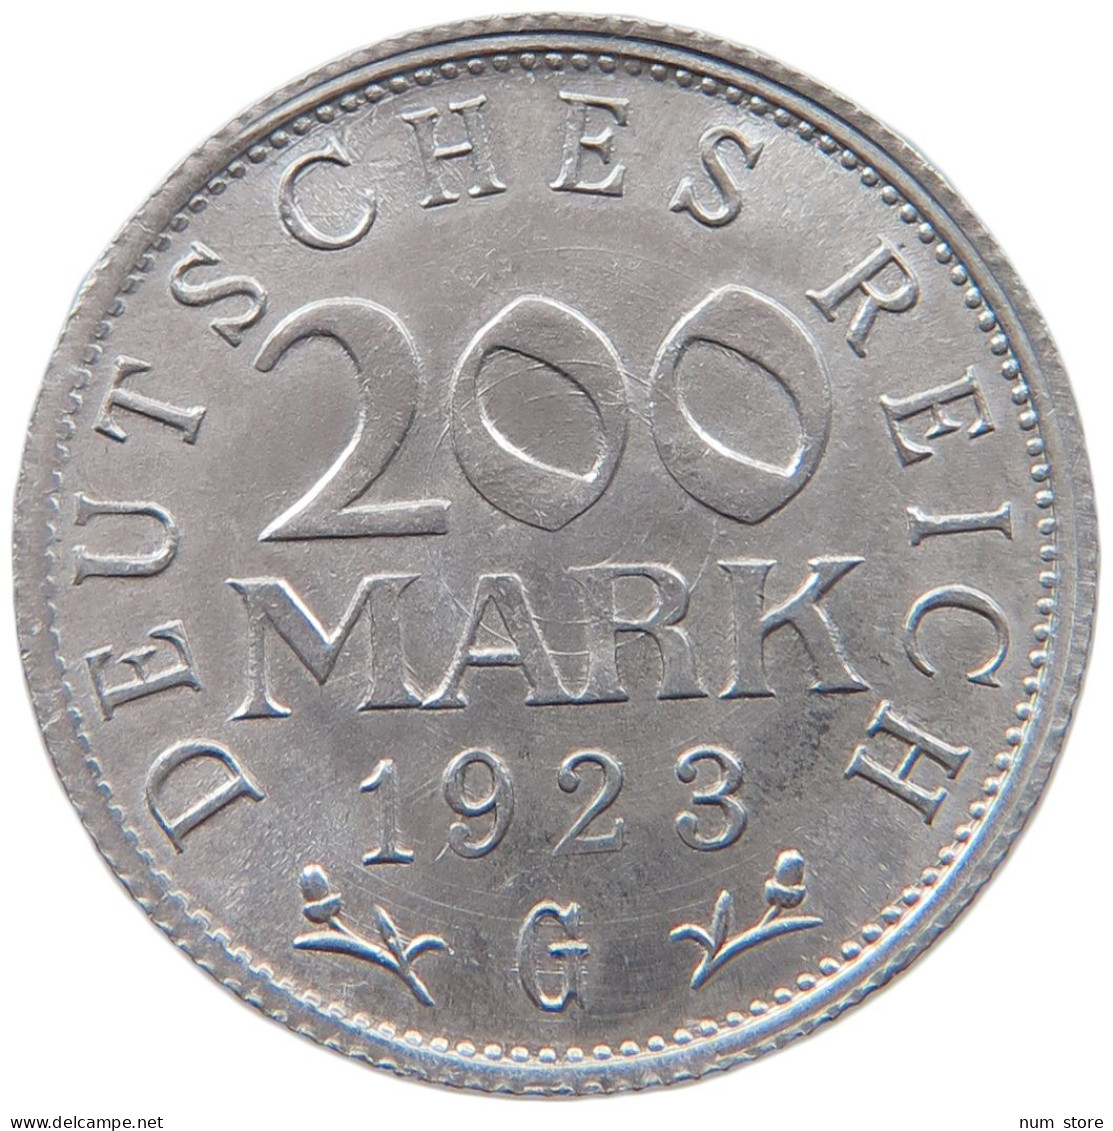 WEIMARER REPUBLIK 200 MARK 1923 G  #MA 098797 - 200 & 500 Mark